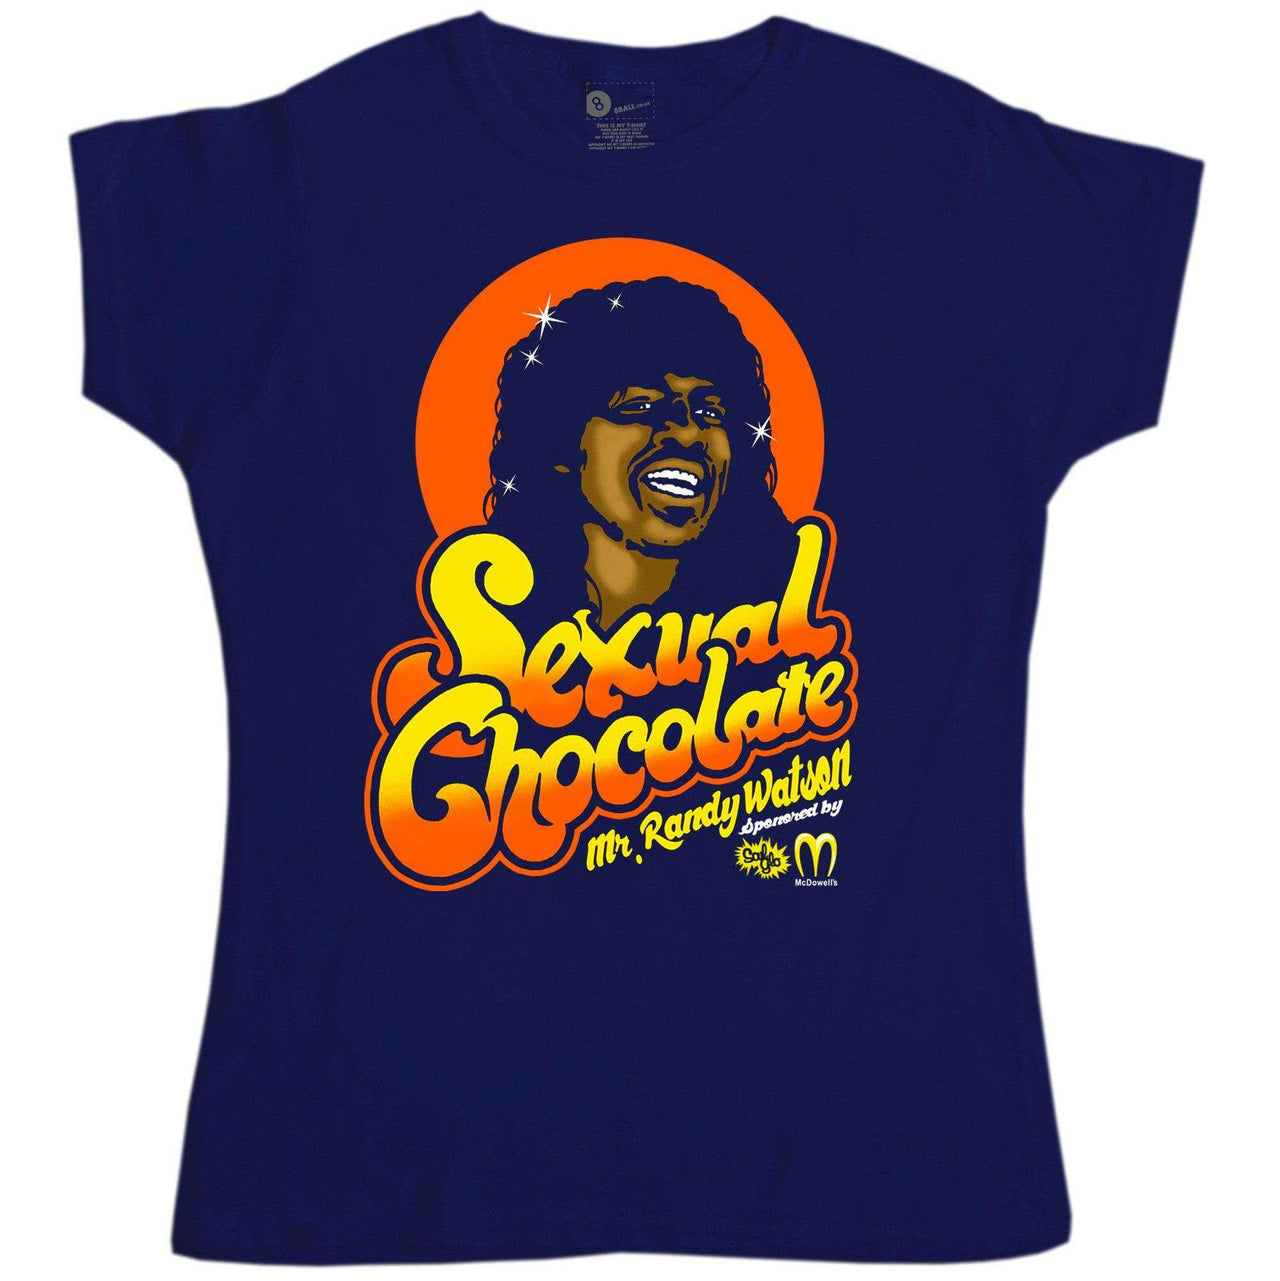 Sexual Chocolate T-Shirt for Women 8Ball